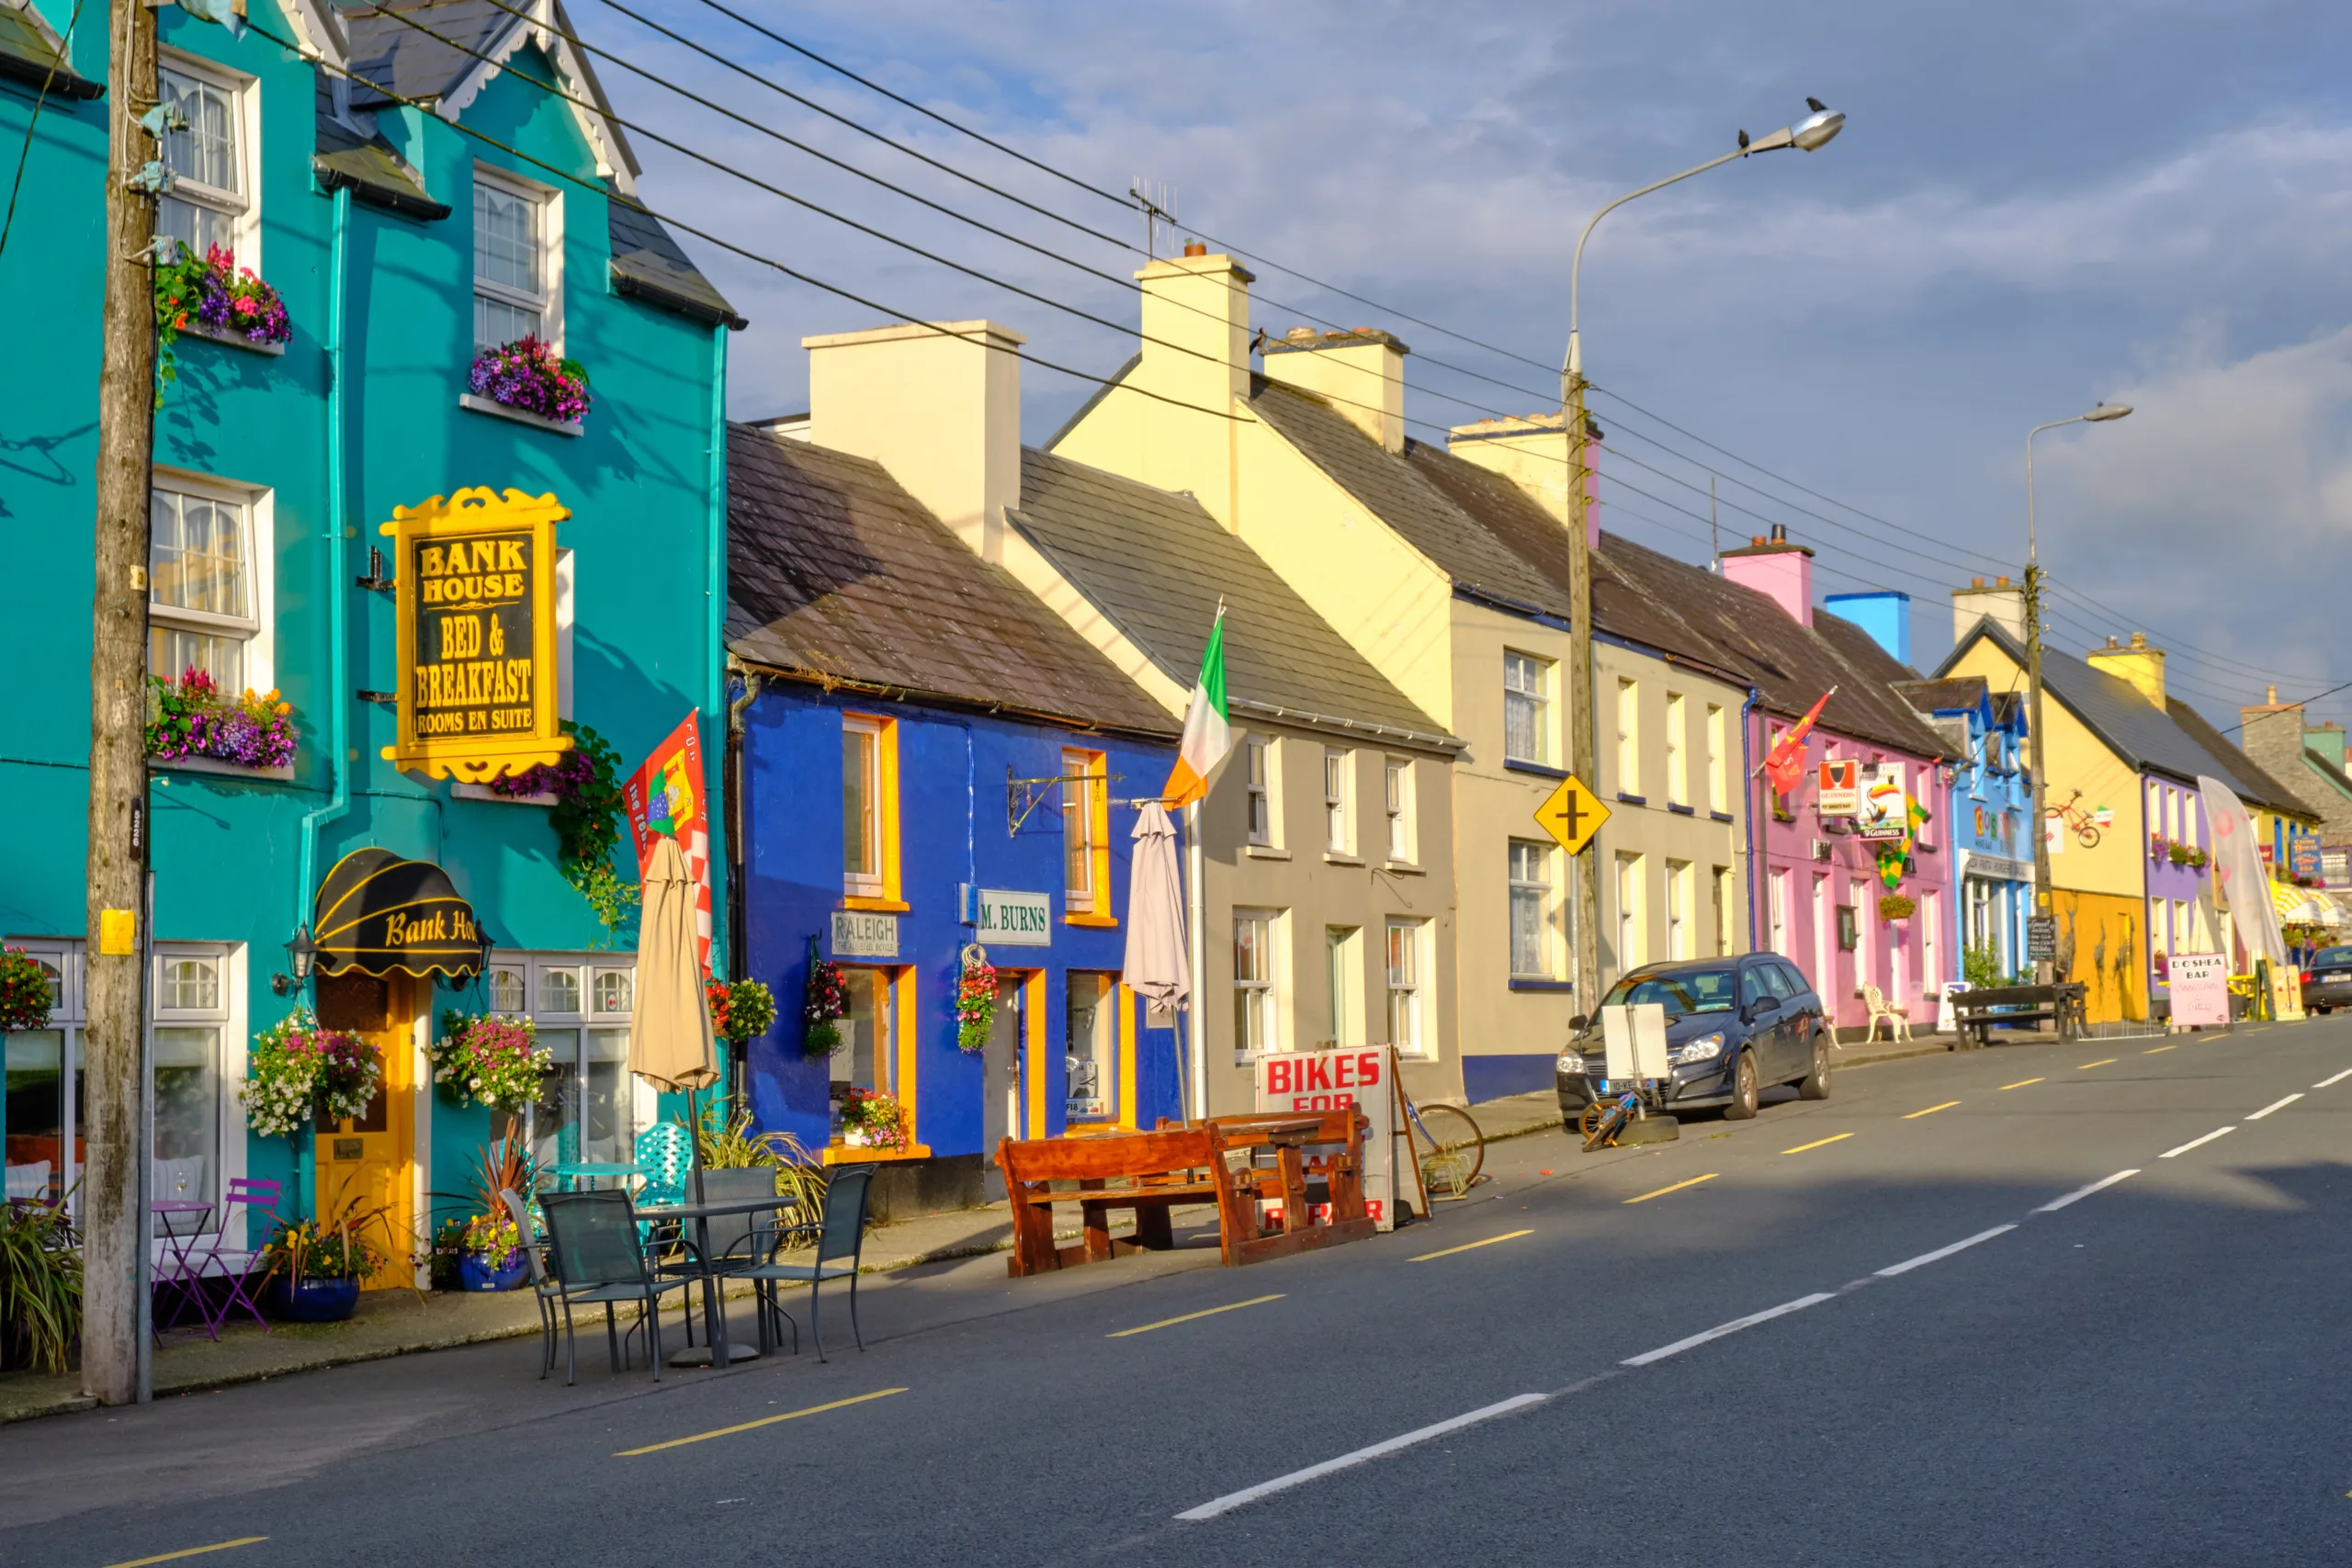 The Village of Sneem, Kerry, Ireland